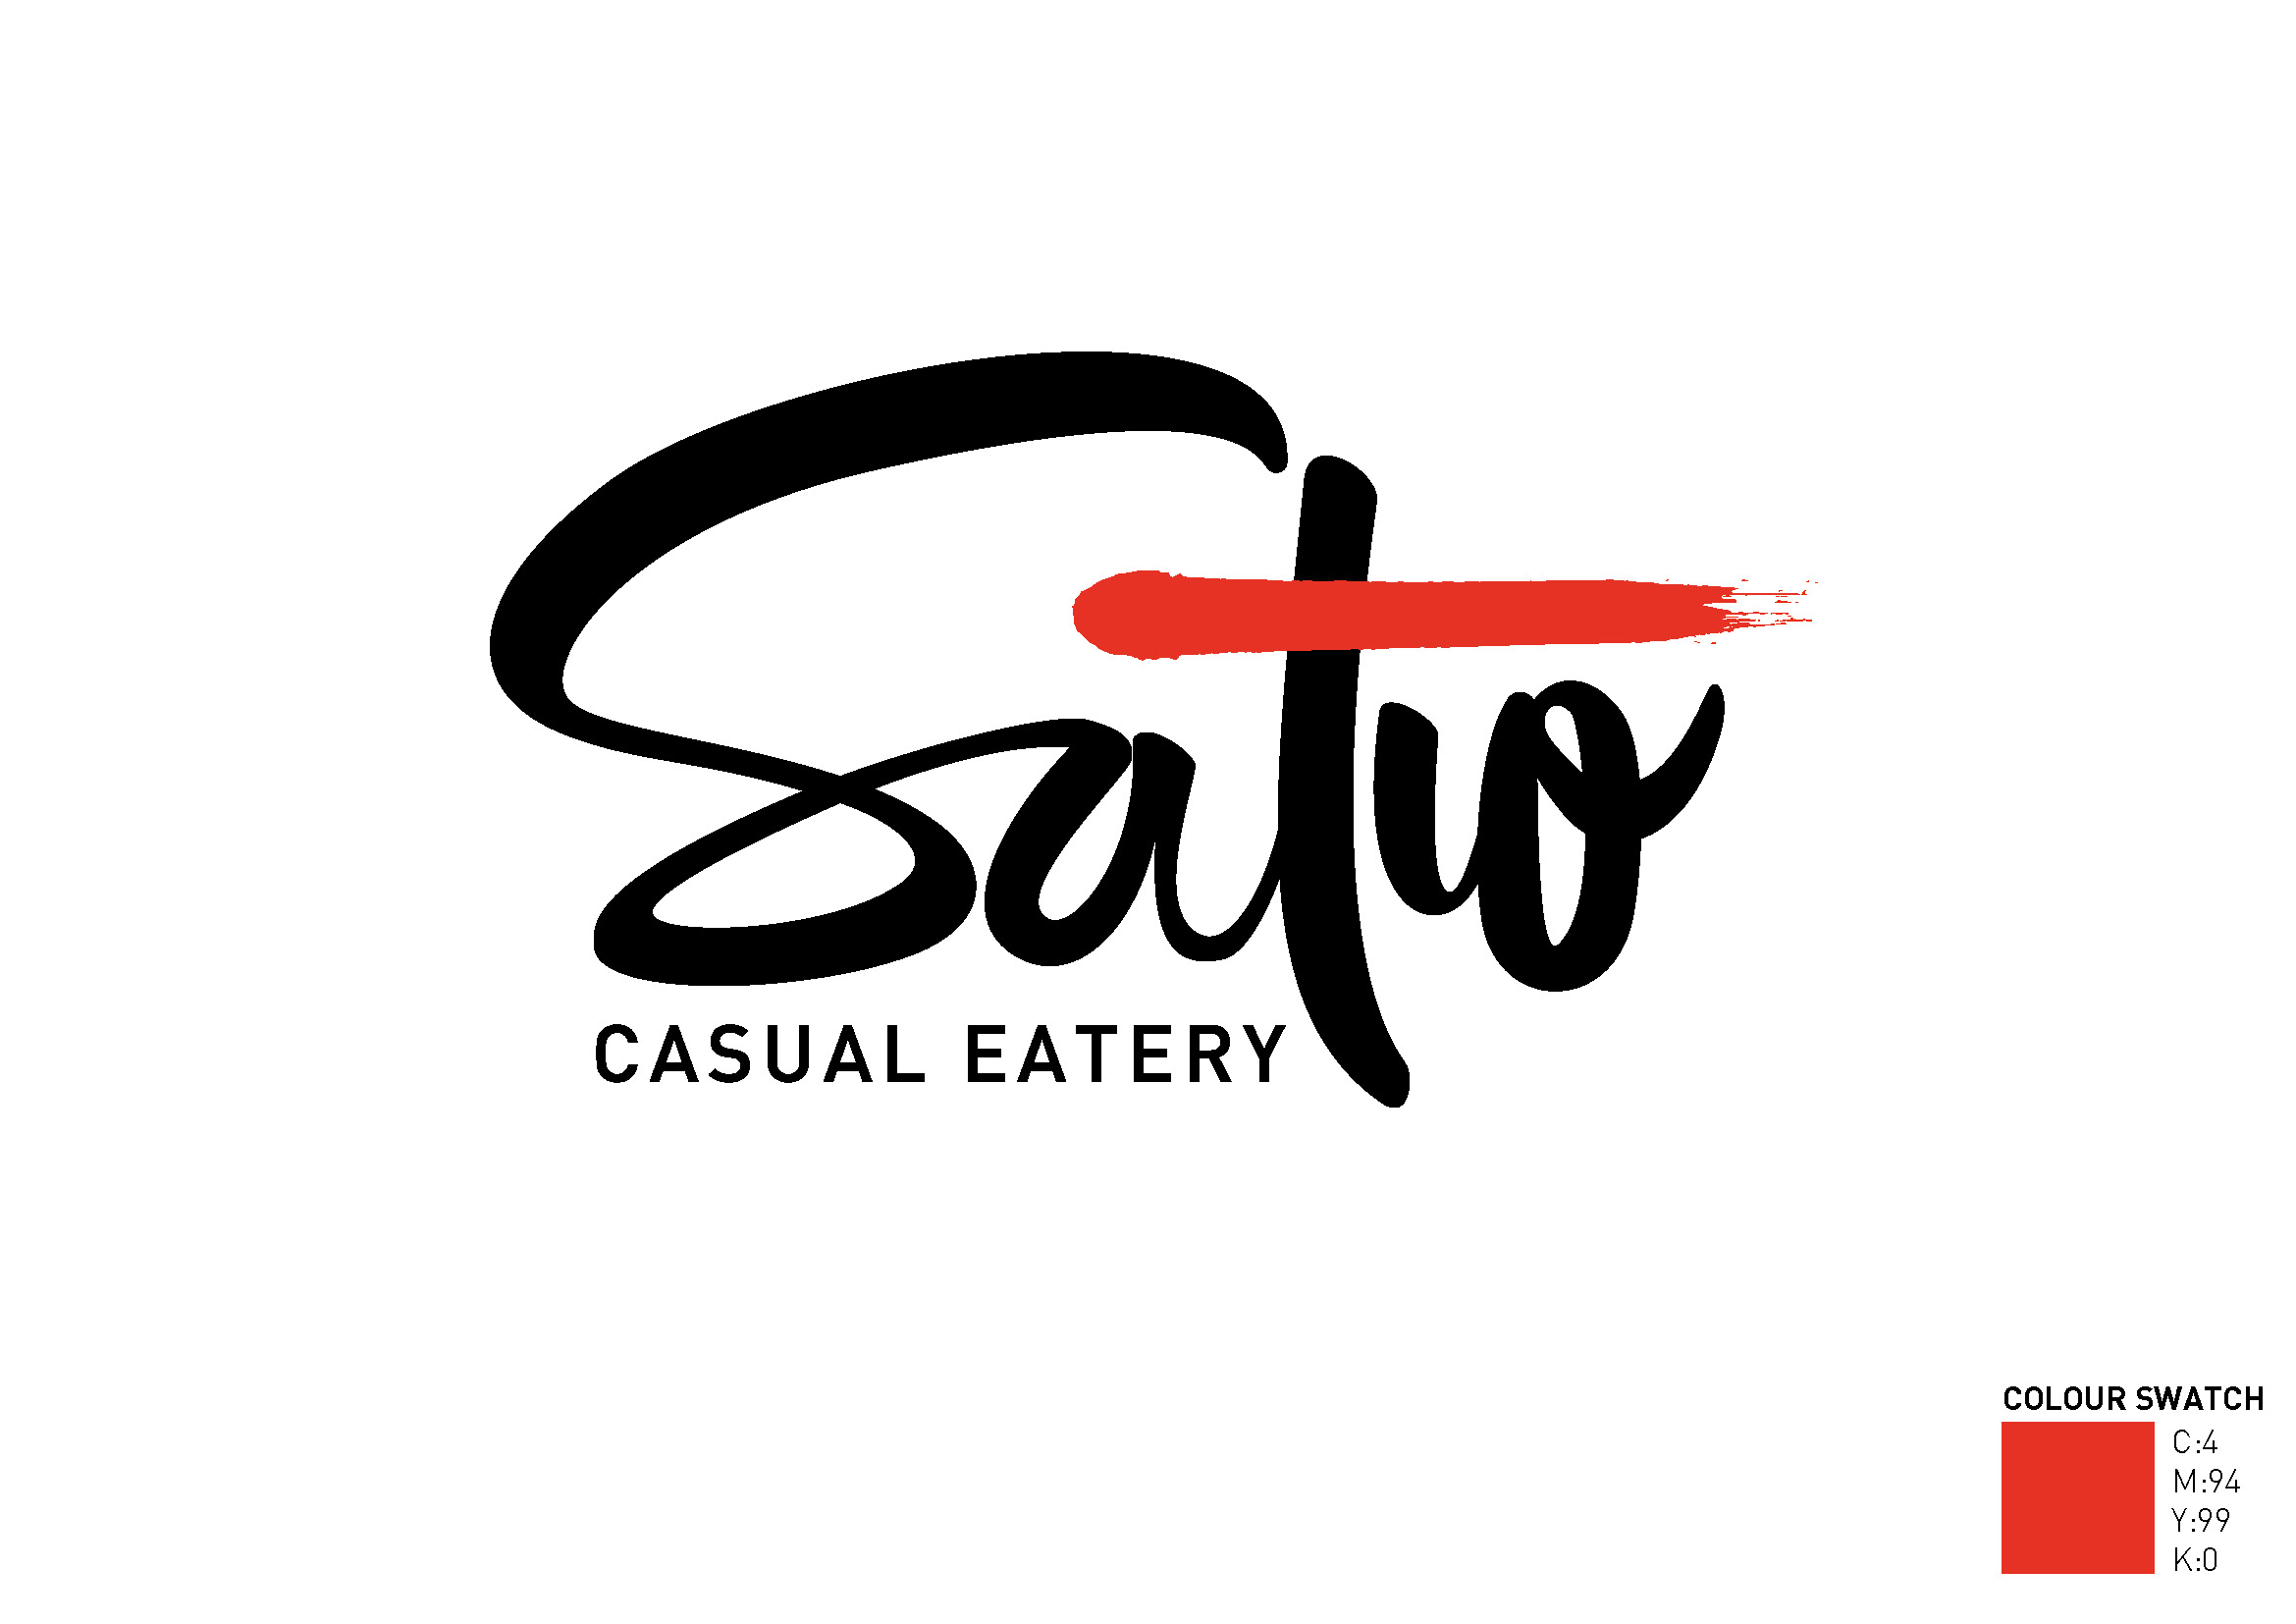 Satio Casual Eatery 